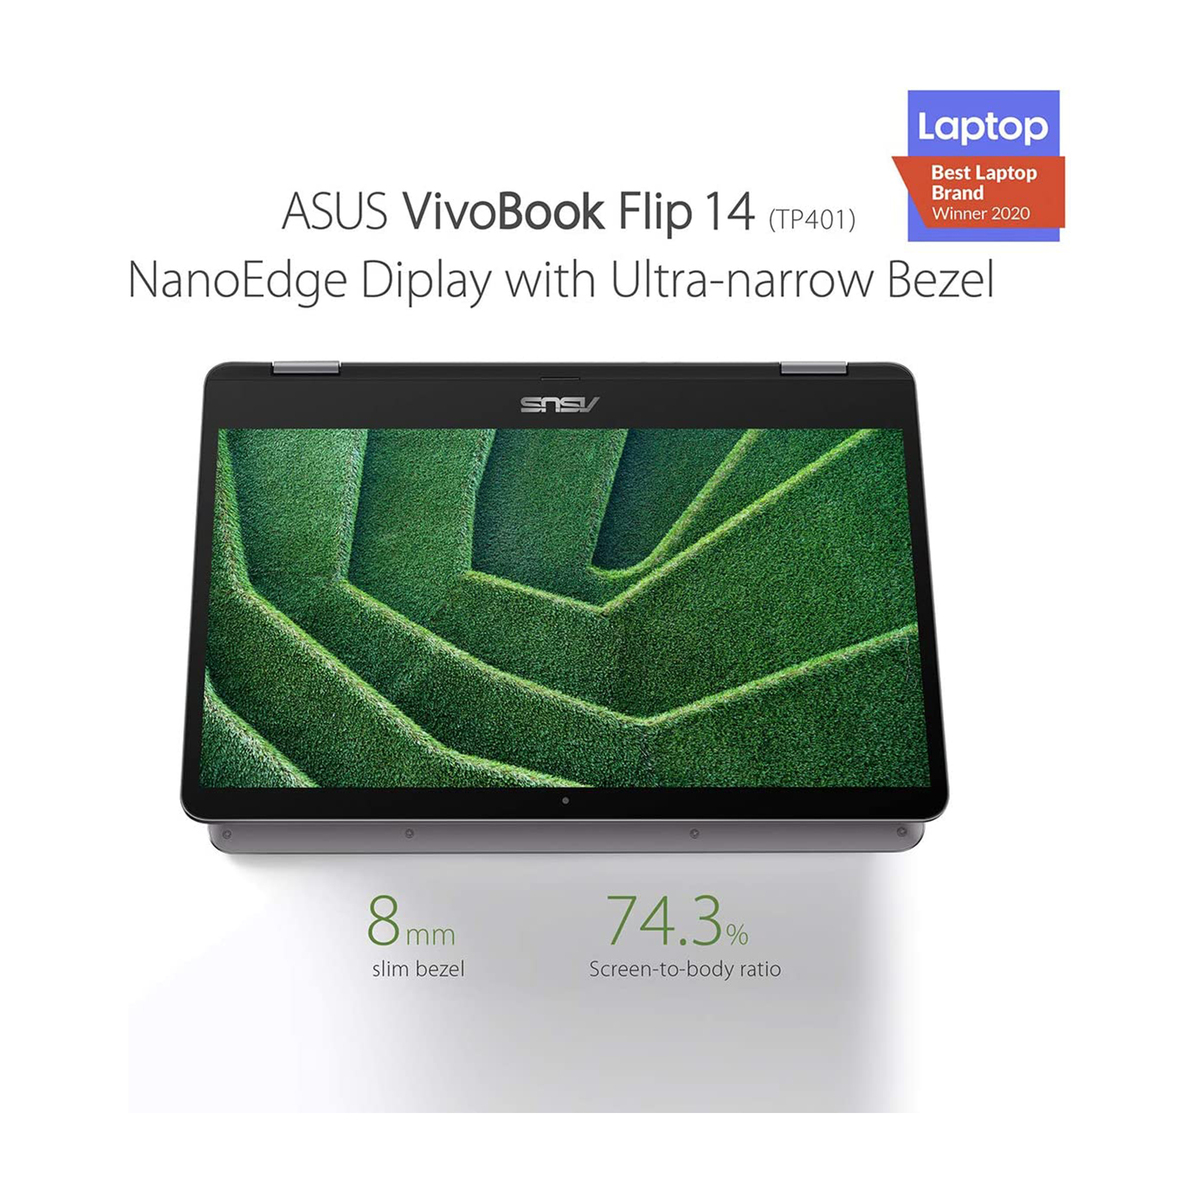 ASUS Vivobook Flip TP401MA-EC340TS, Touch Laptop, Celeron, 4GB RAM, 128GB EMMC, Intel UMA, 14.0 inch FHD 1920X1080 16:9, Windows 10 Home S Mode, Grey, With Microsoft 365 Personal 1-year, Stylus included